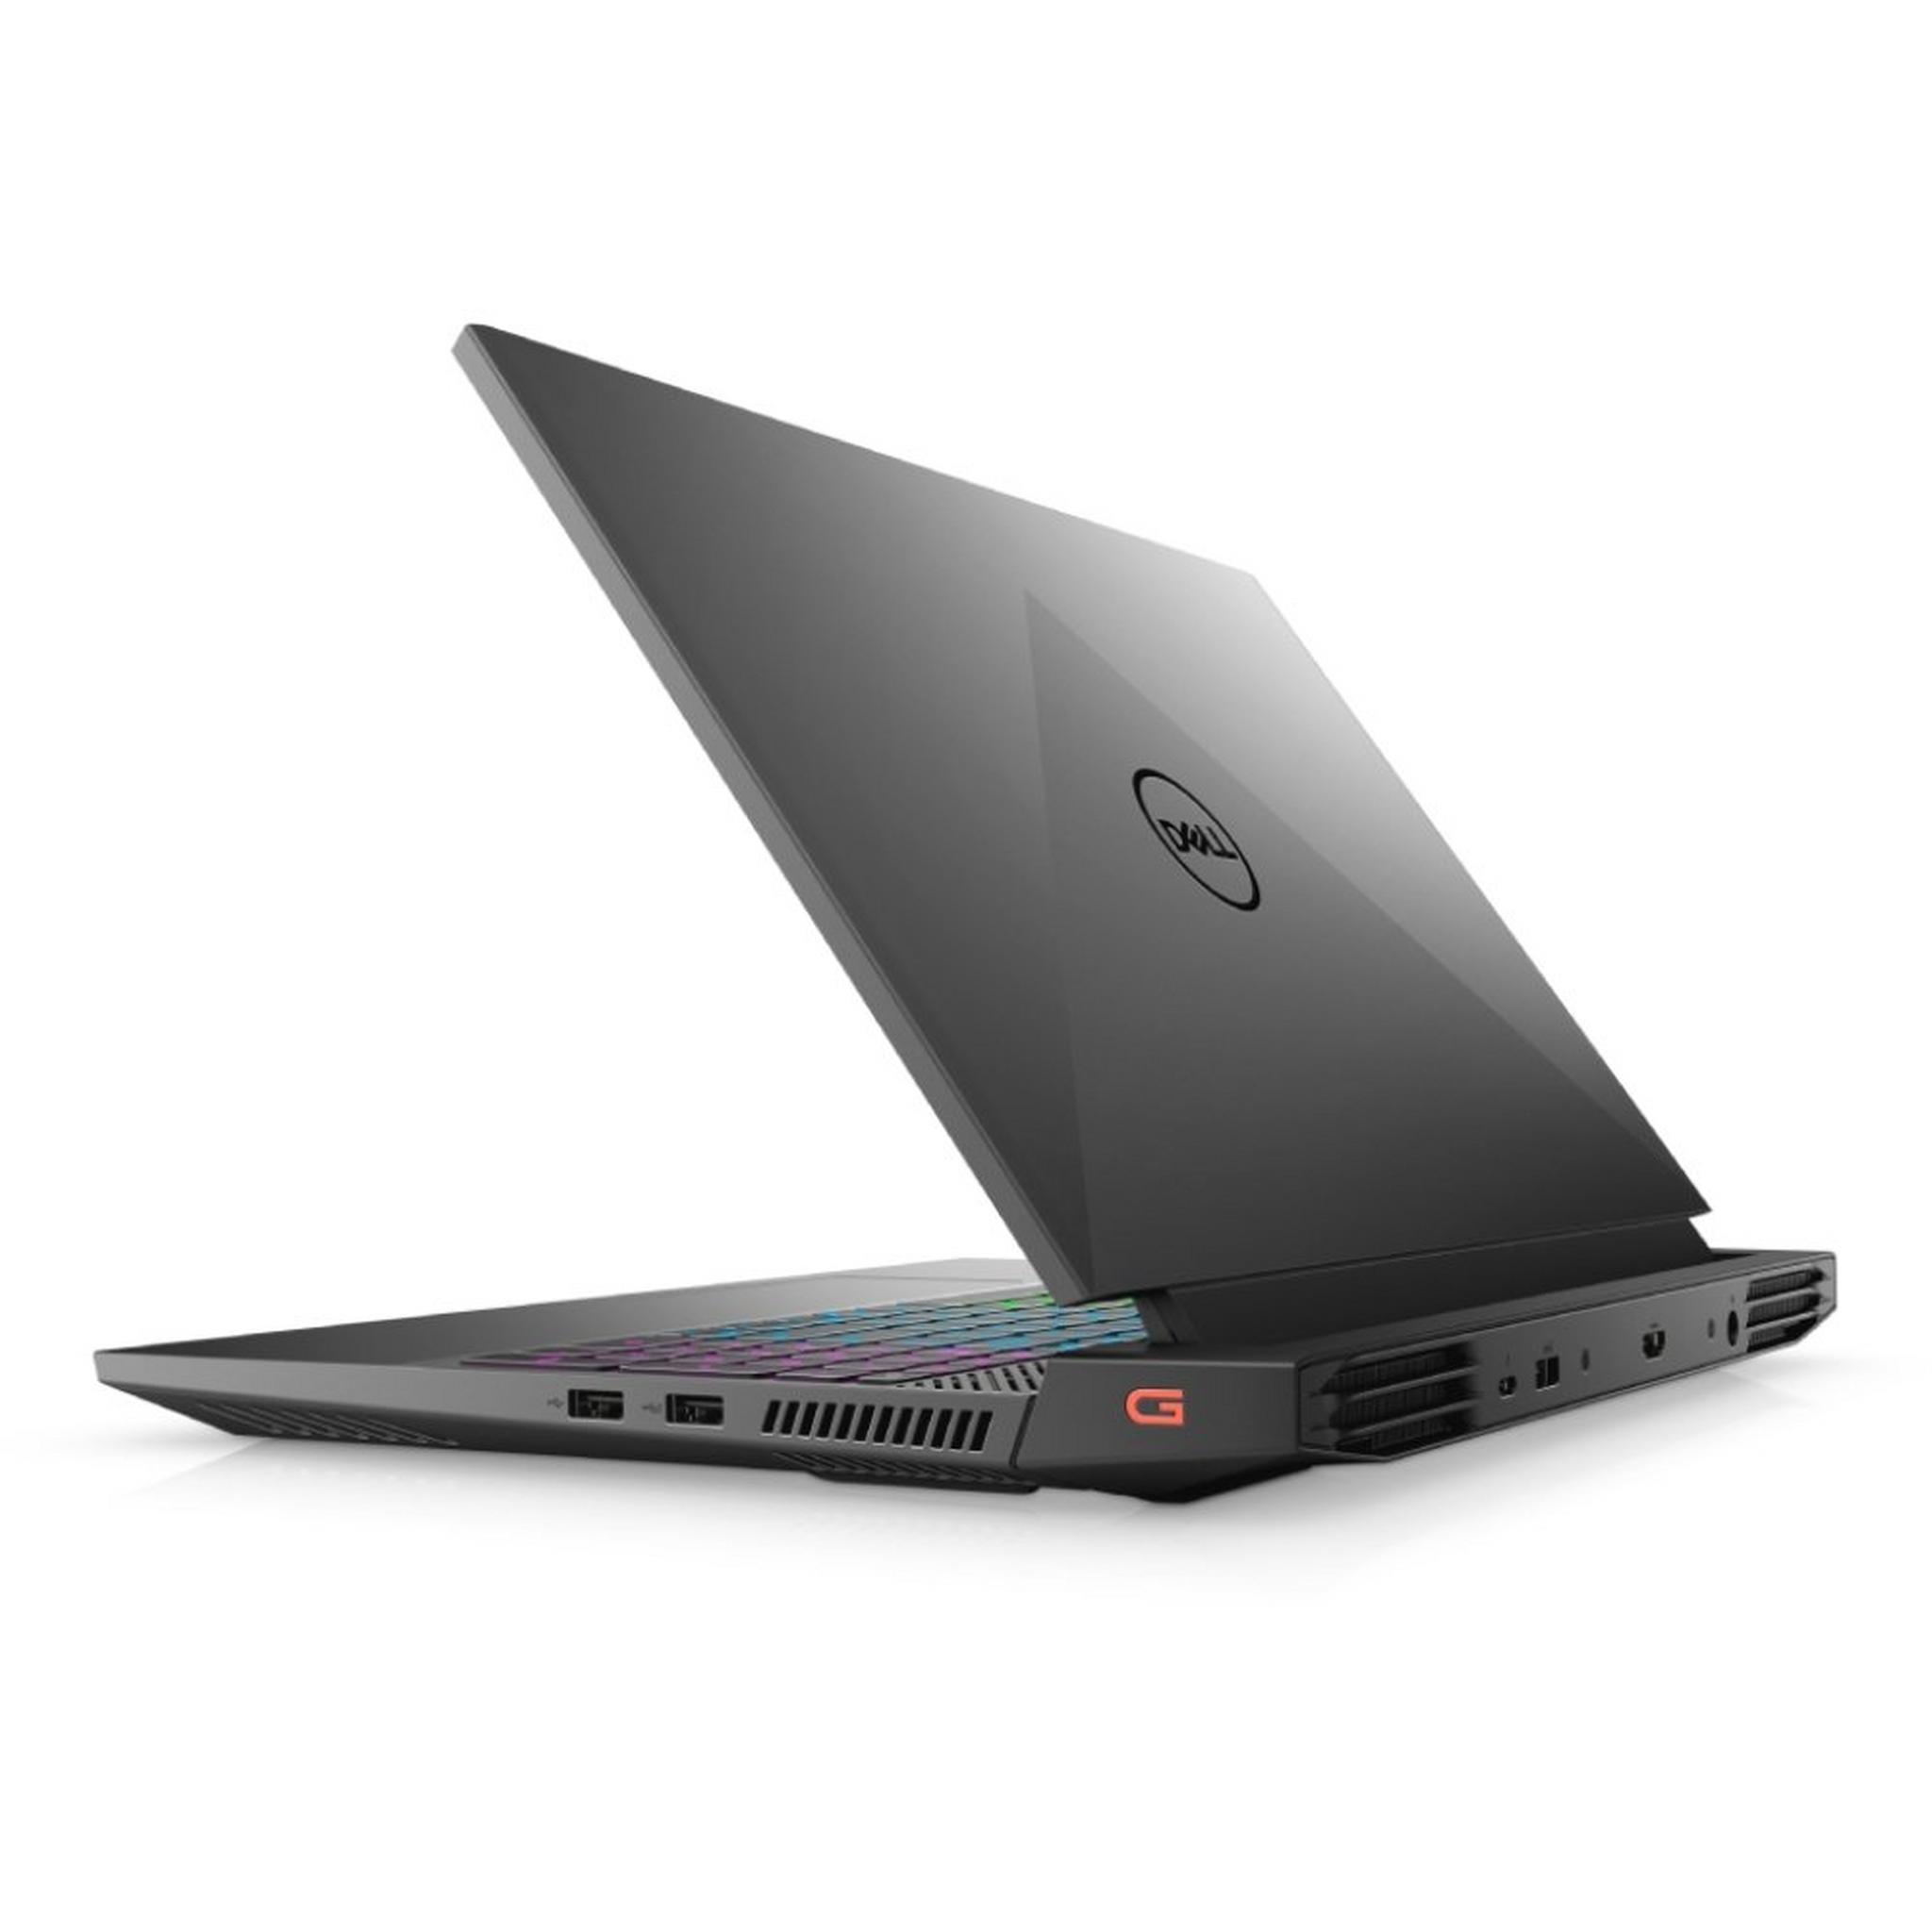 Dell G15 Core i7 11th Gen, 16GB RAM, 512GB SSD, 15.6-inch FHD Gaming Laptop - Gray